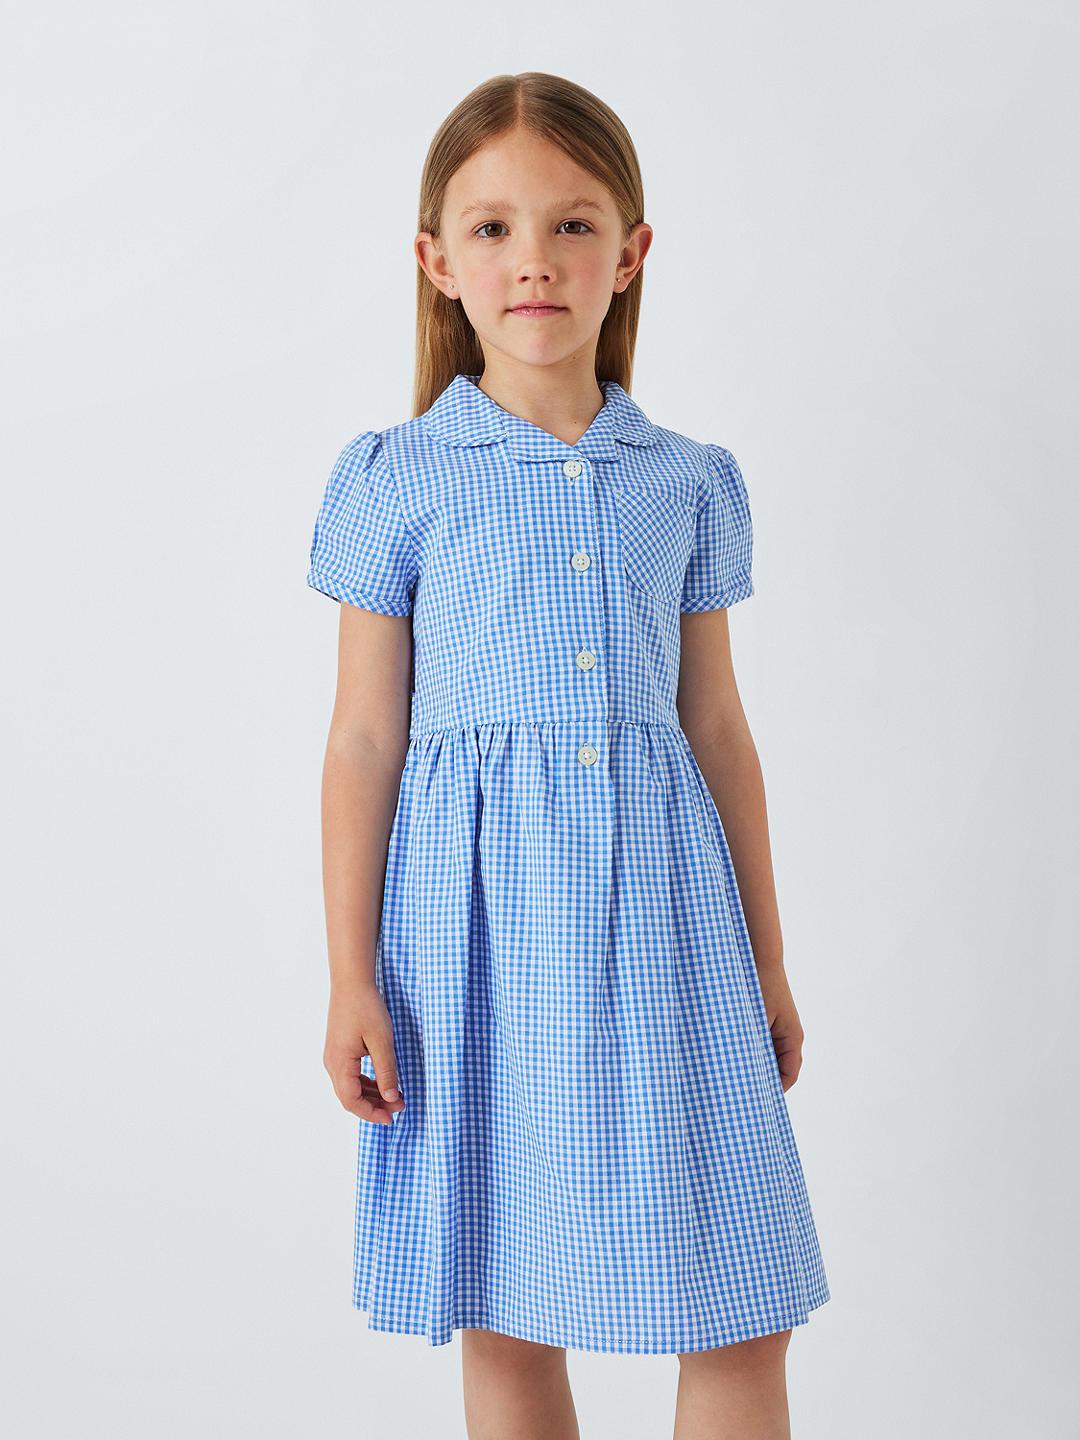 John Lewis School Belted Gingham Checked Summer Dress, Light Blue